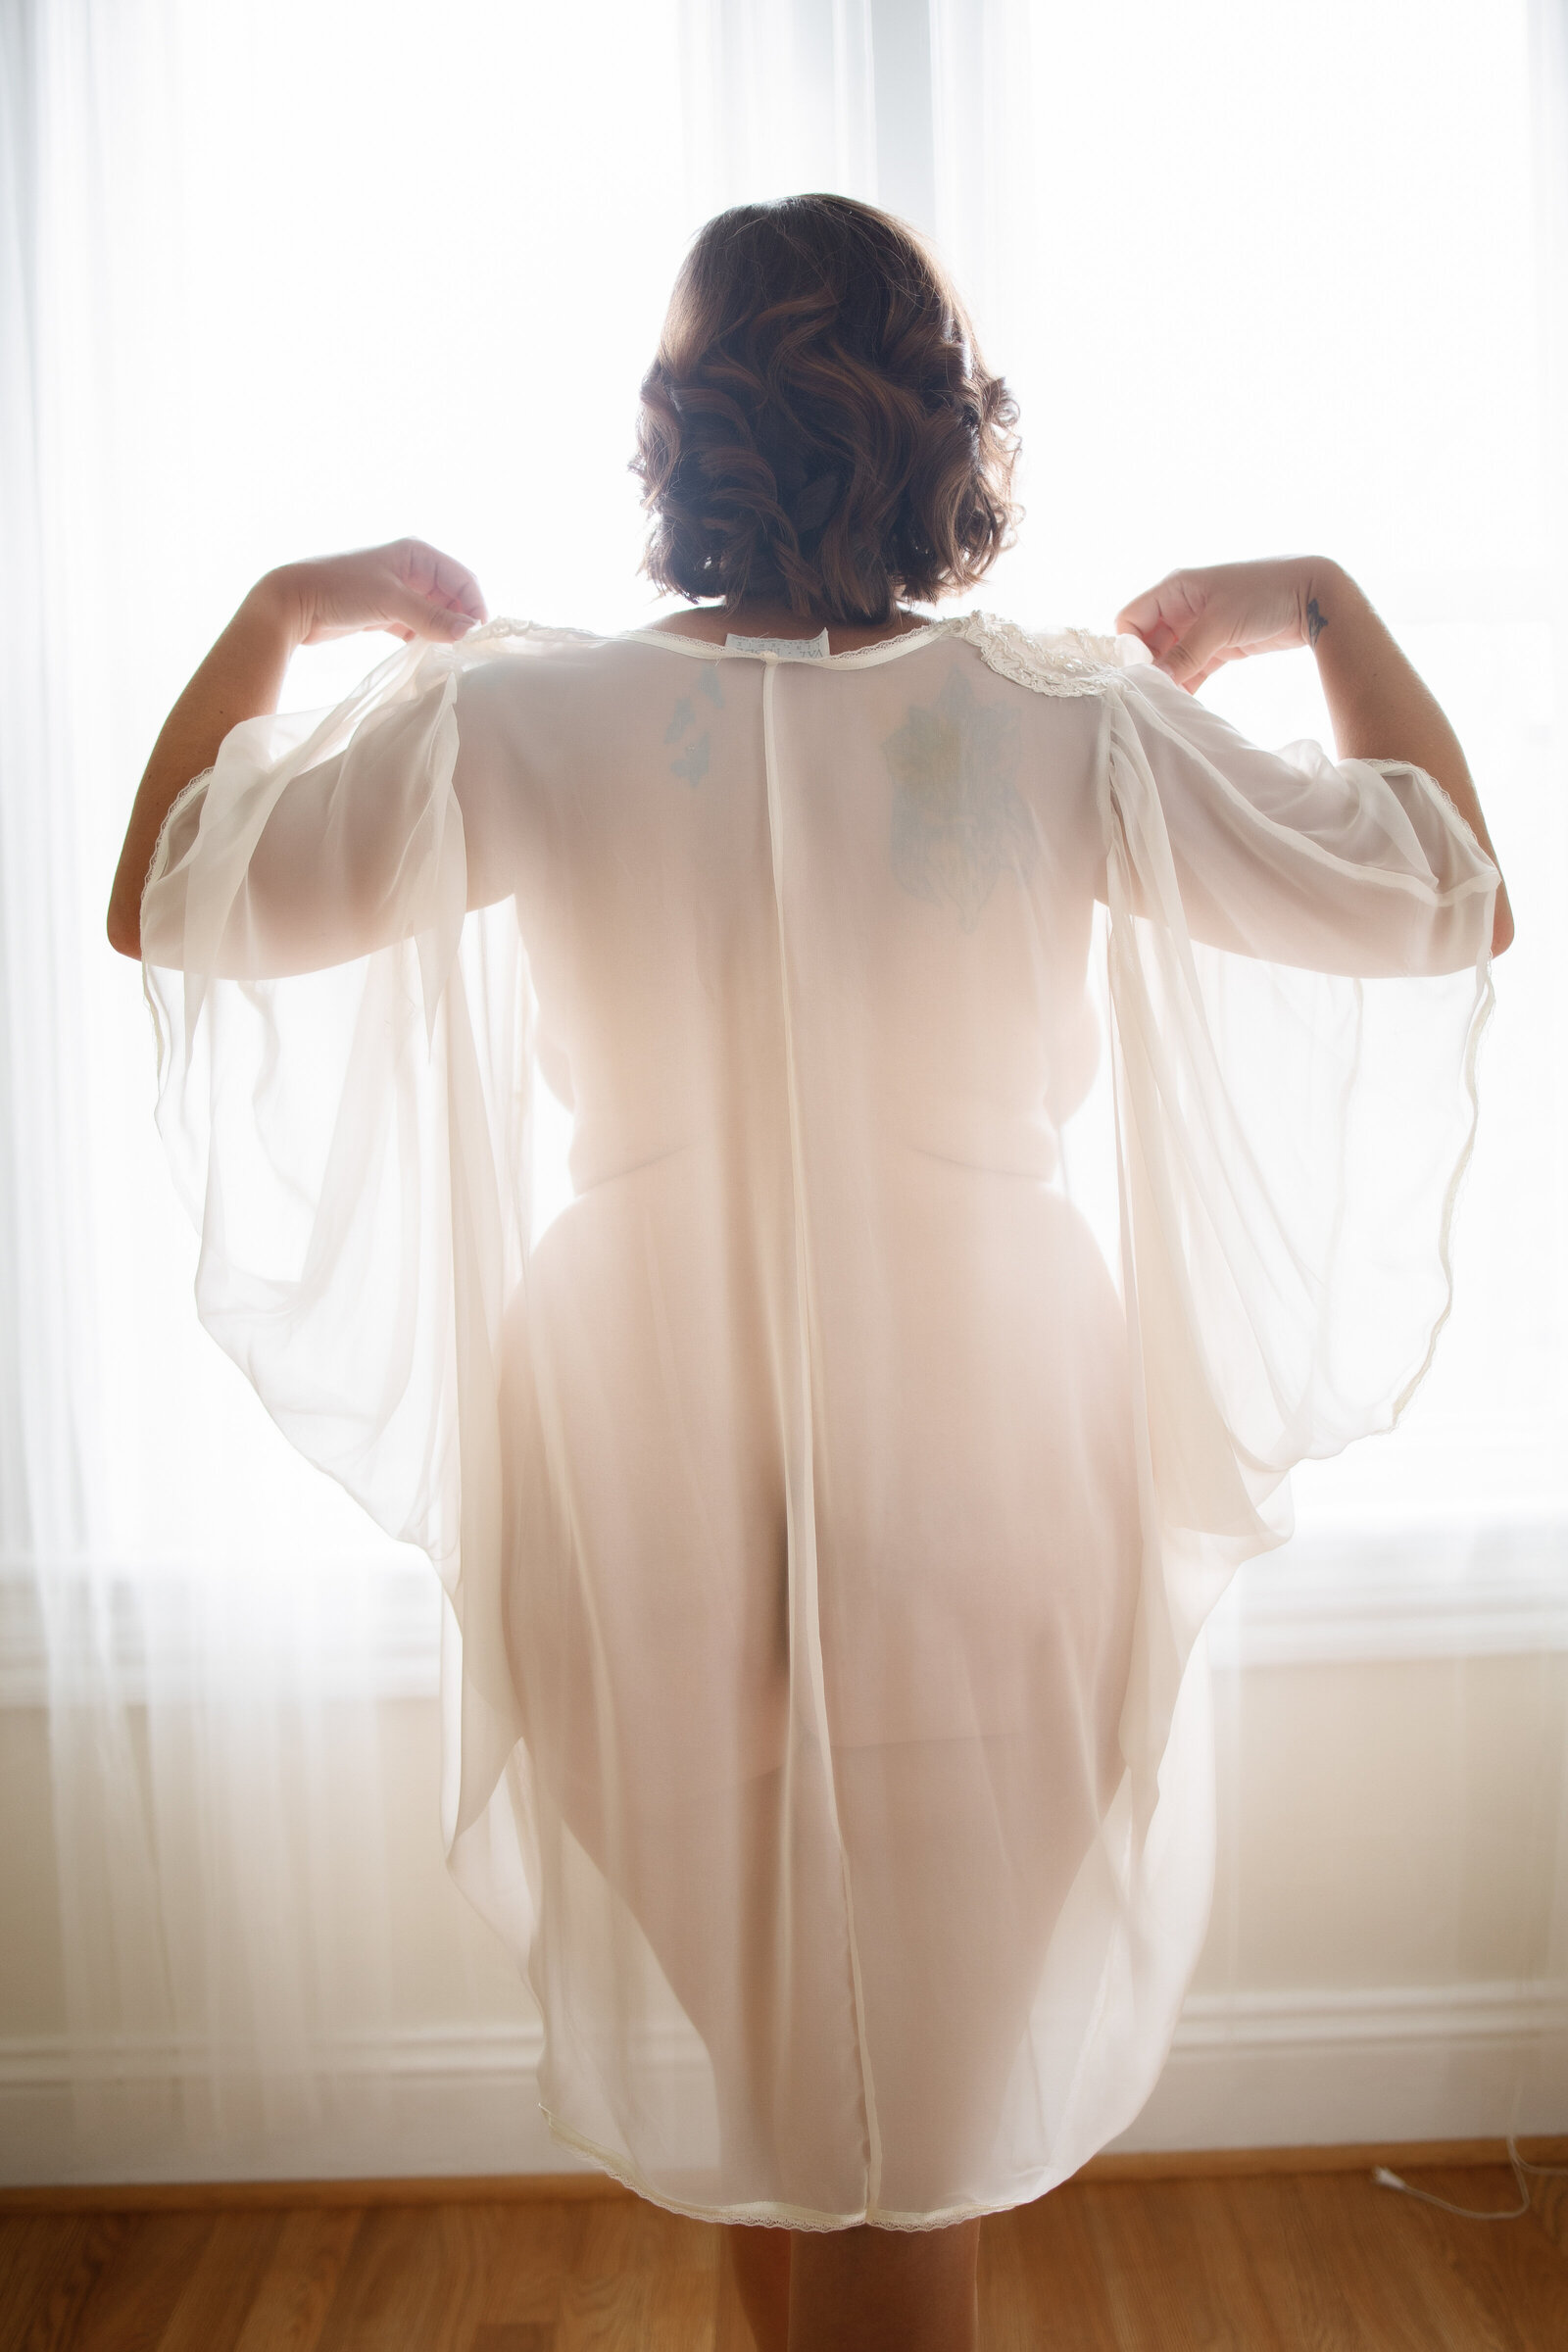 Back of woman wearing white bathrobe